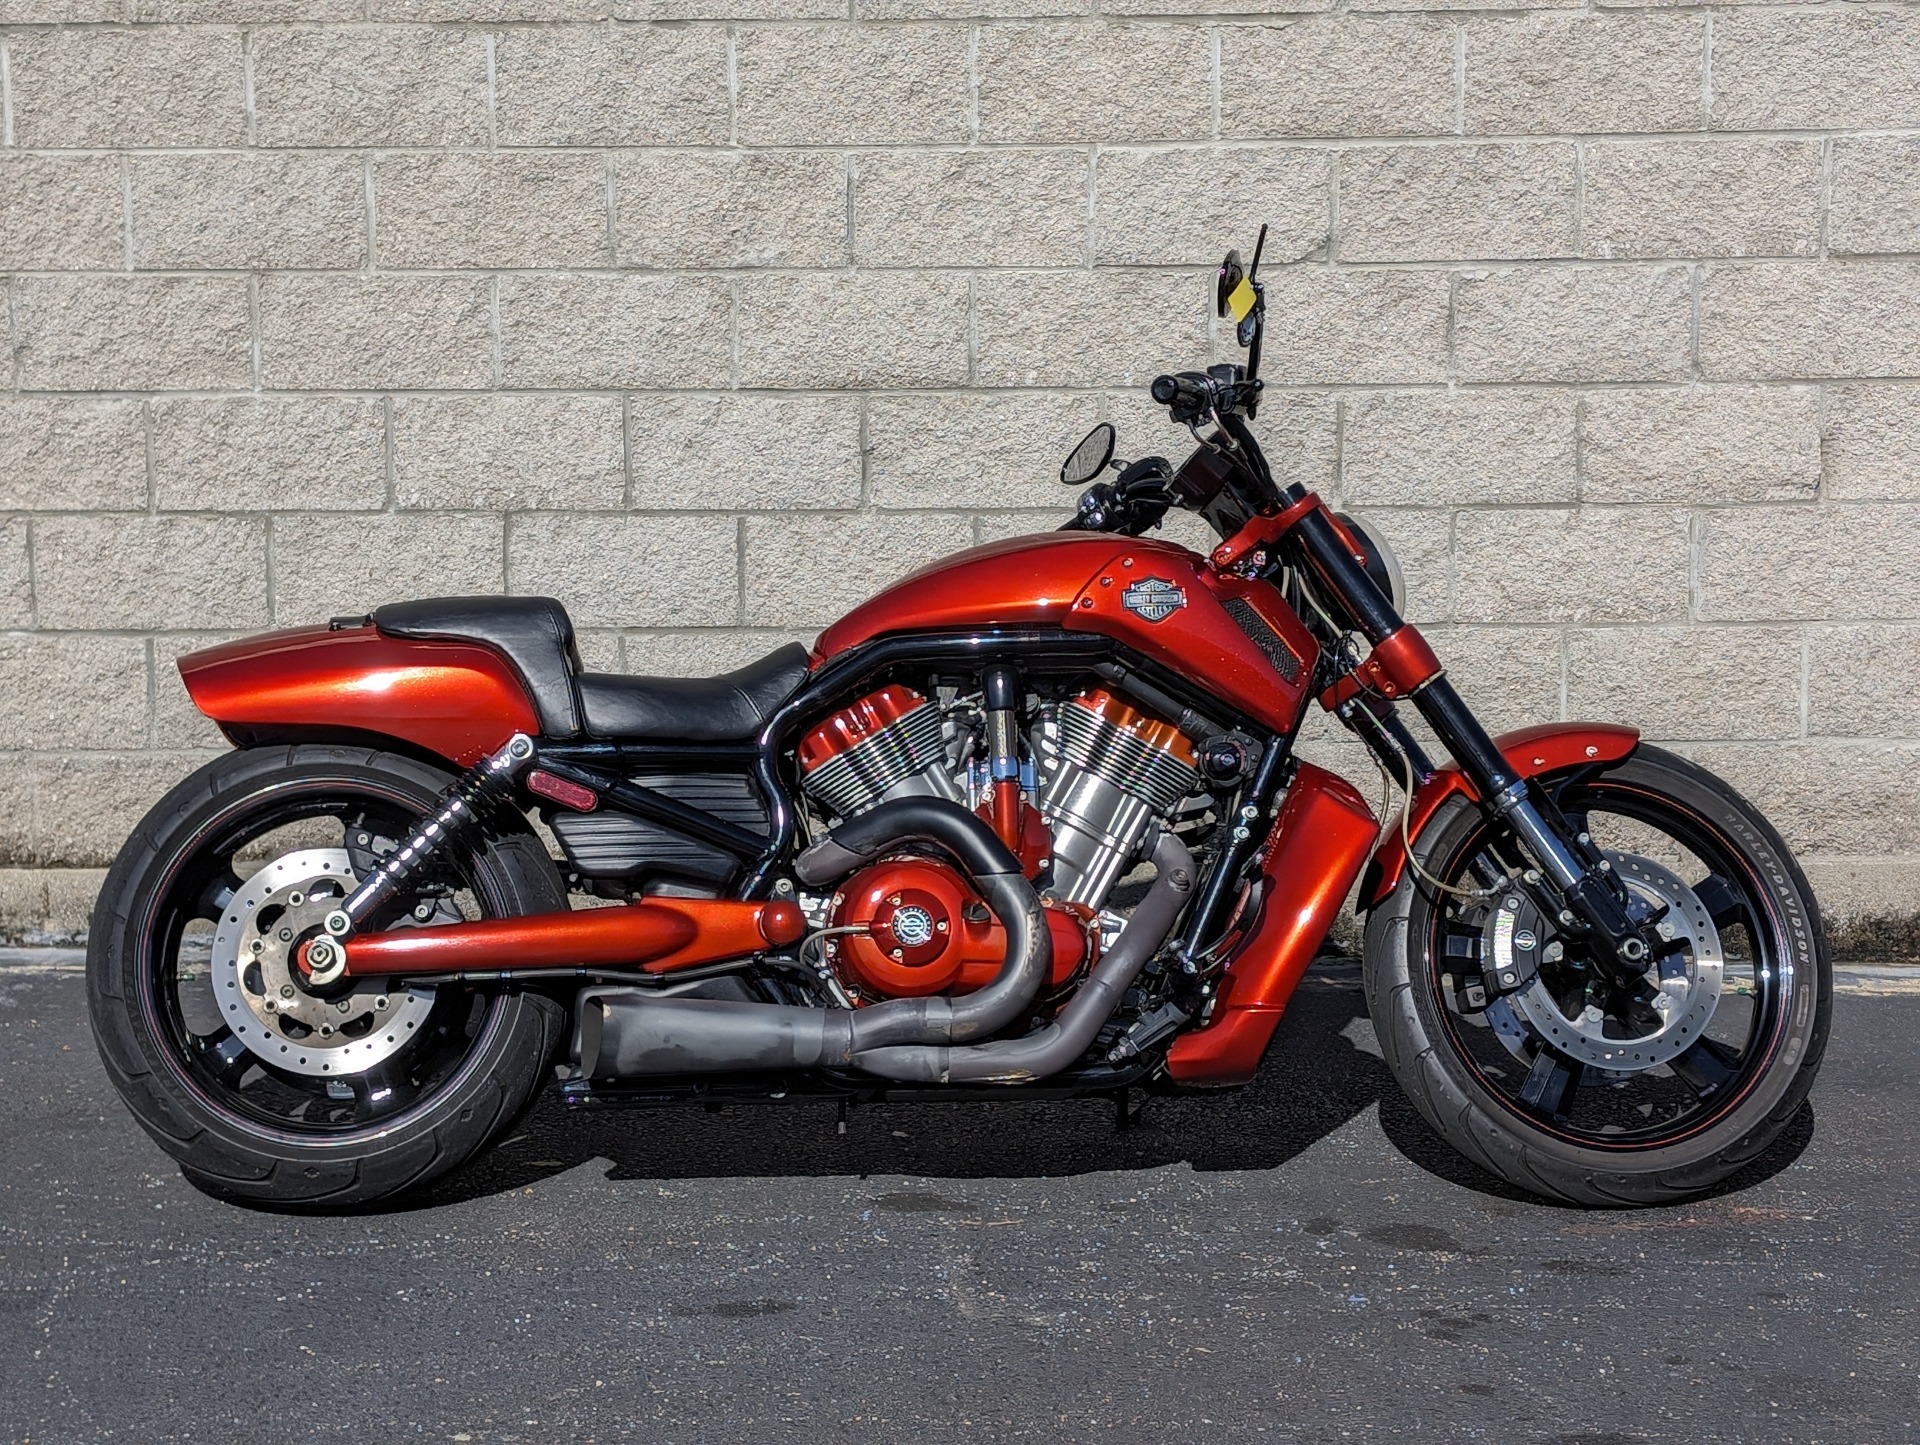 2013 Harley-Davidson V-Rod Muscle® in Columbus, Georgia - Photo 1